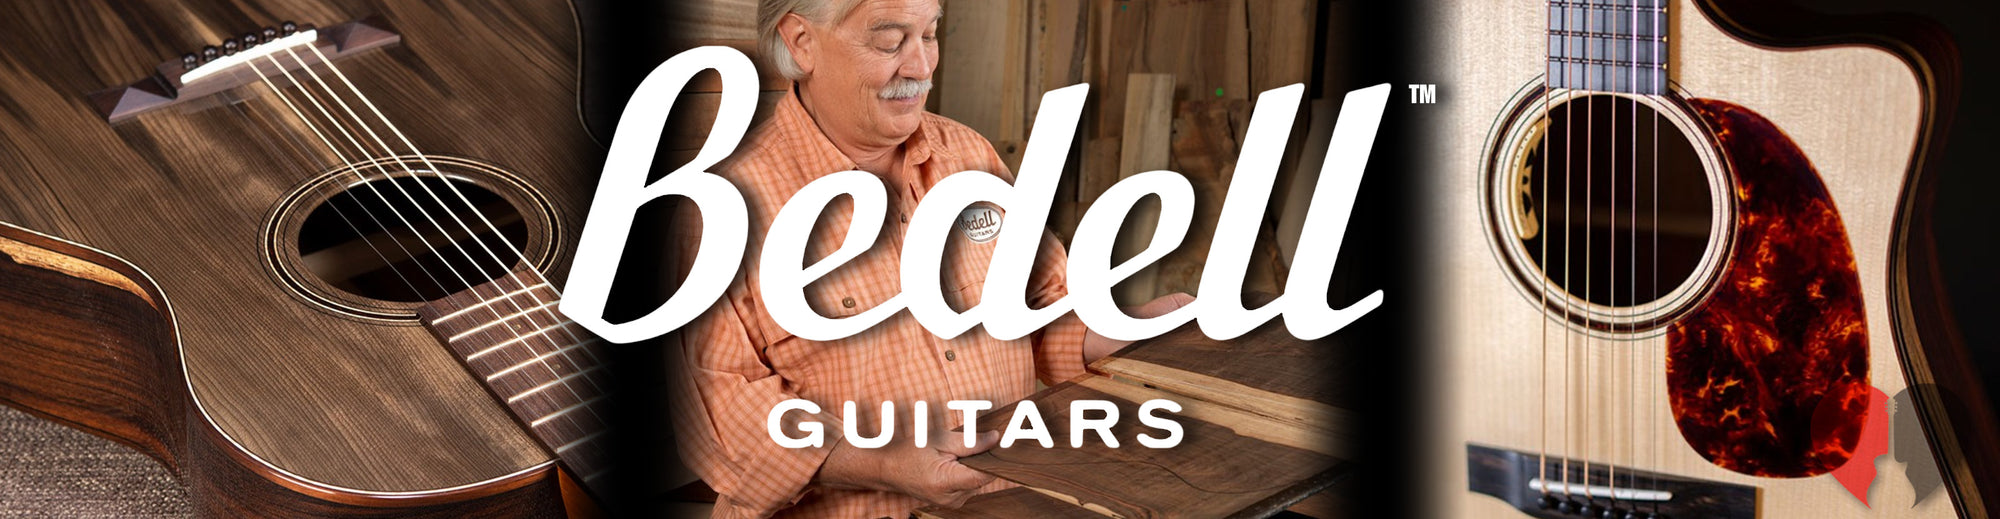 Bedell Guitars